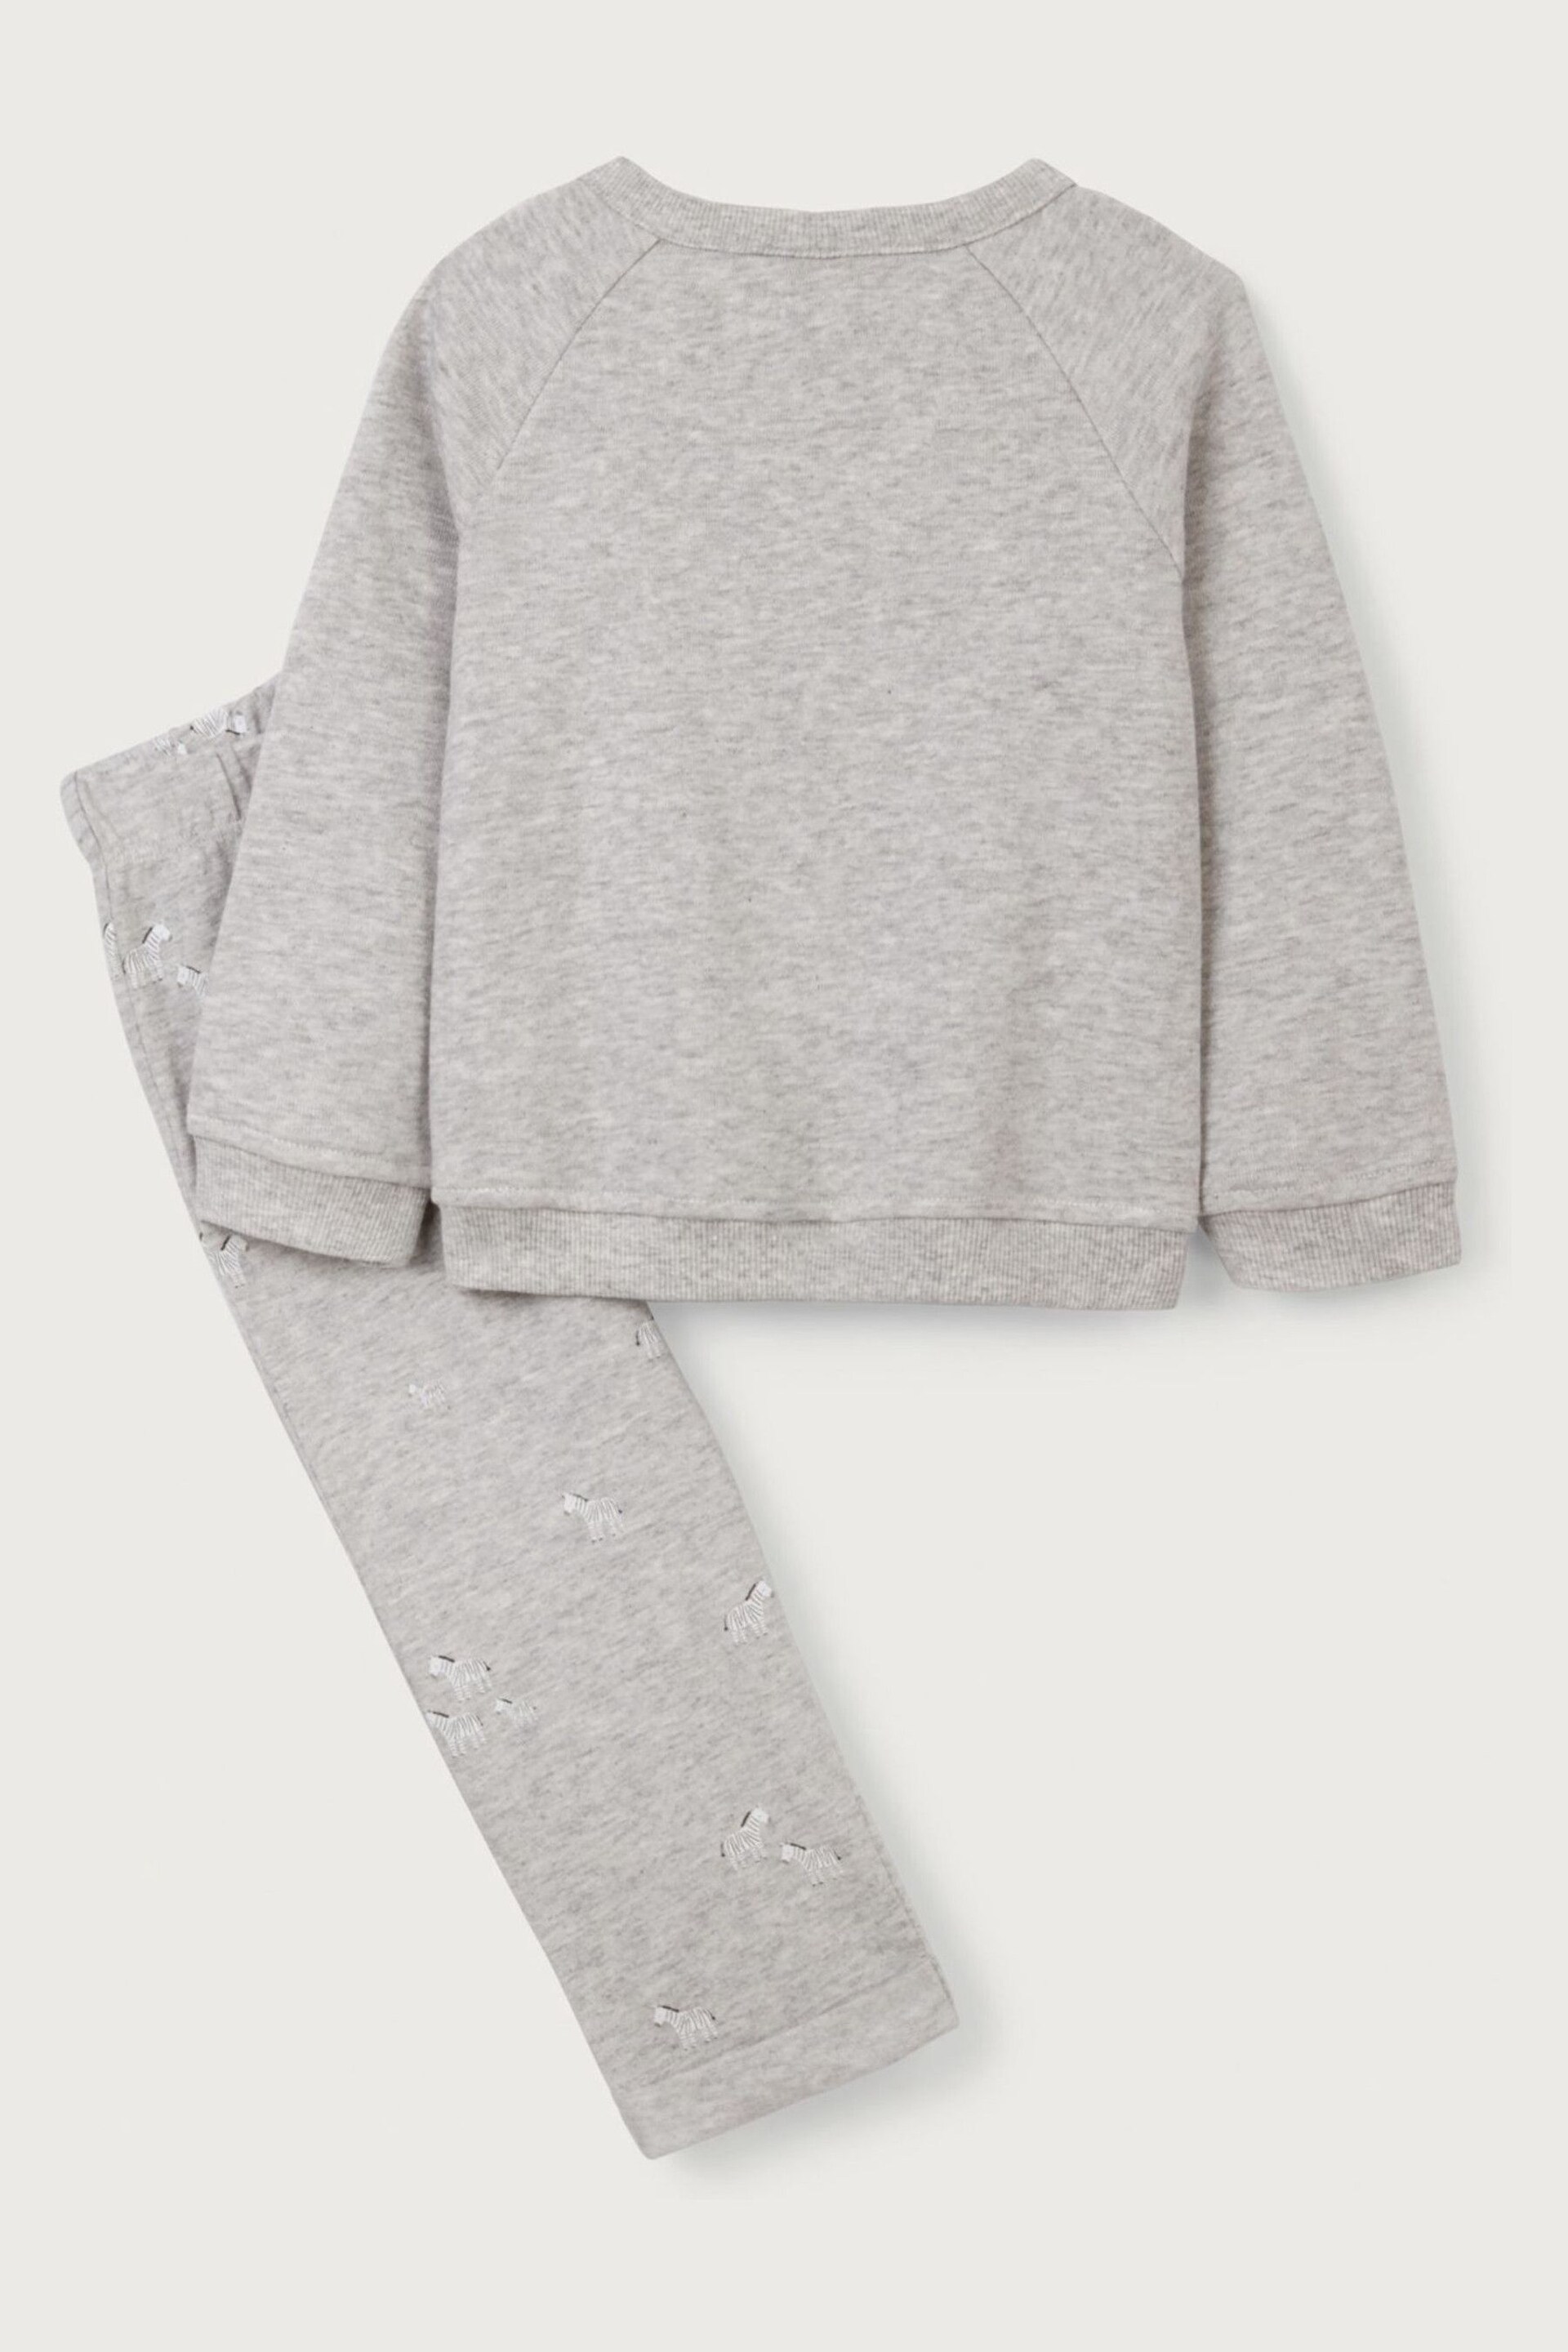 The White Company Grey Organic Cotton Zebra Sweatshirt And Legging Set - Image 6 of 6